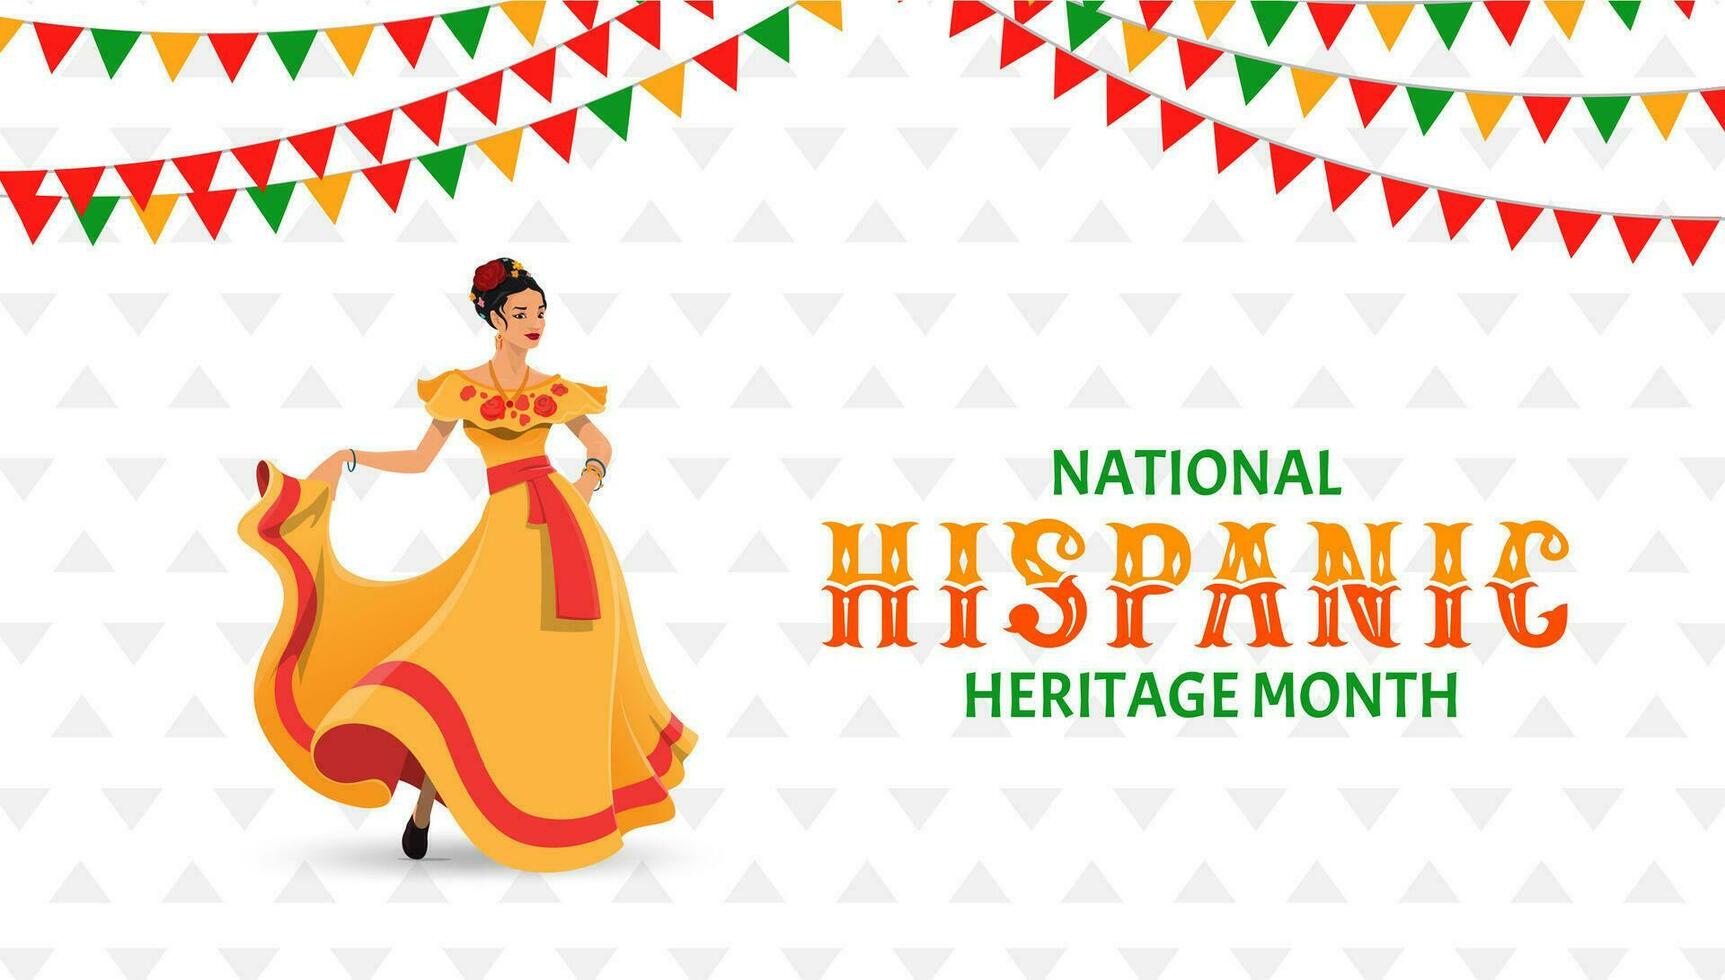 Tanzen Frau auf National spanisch Erbe Monat vektor